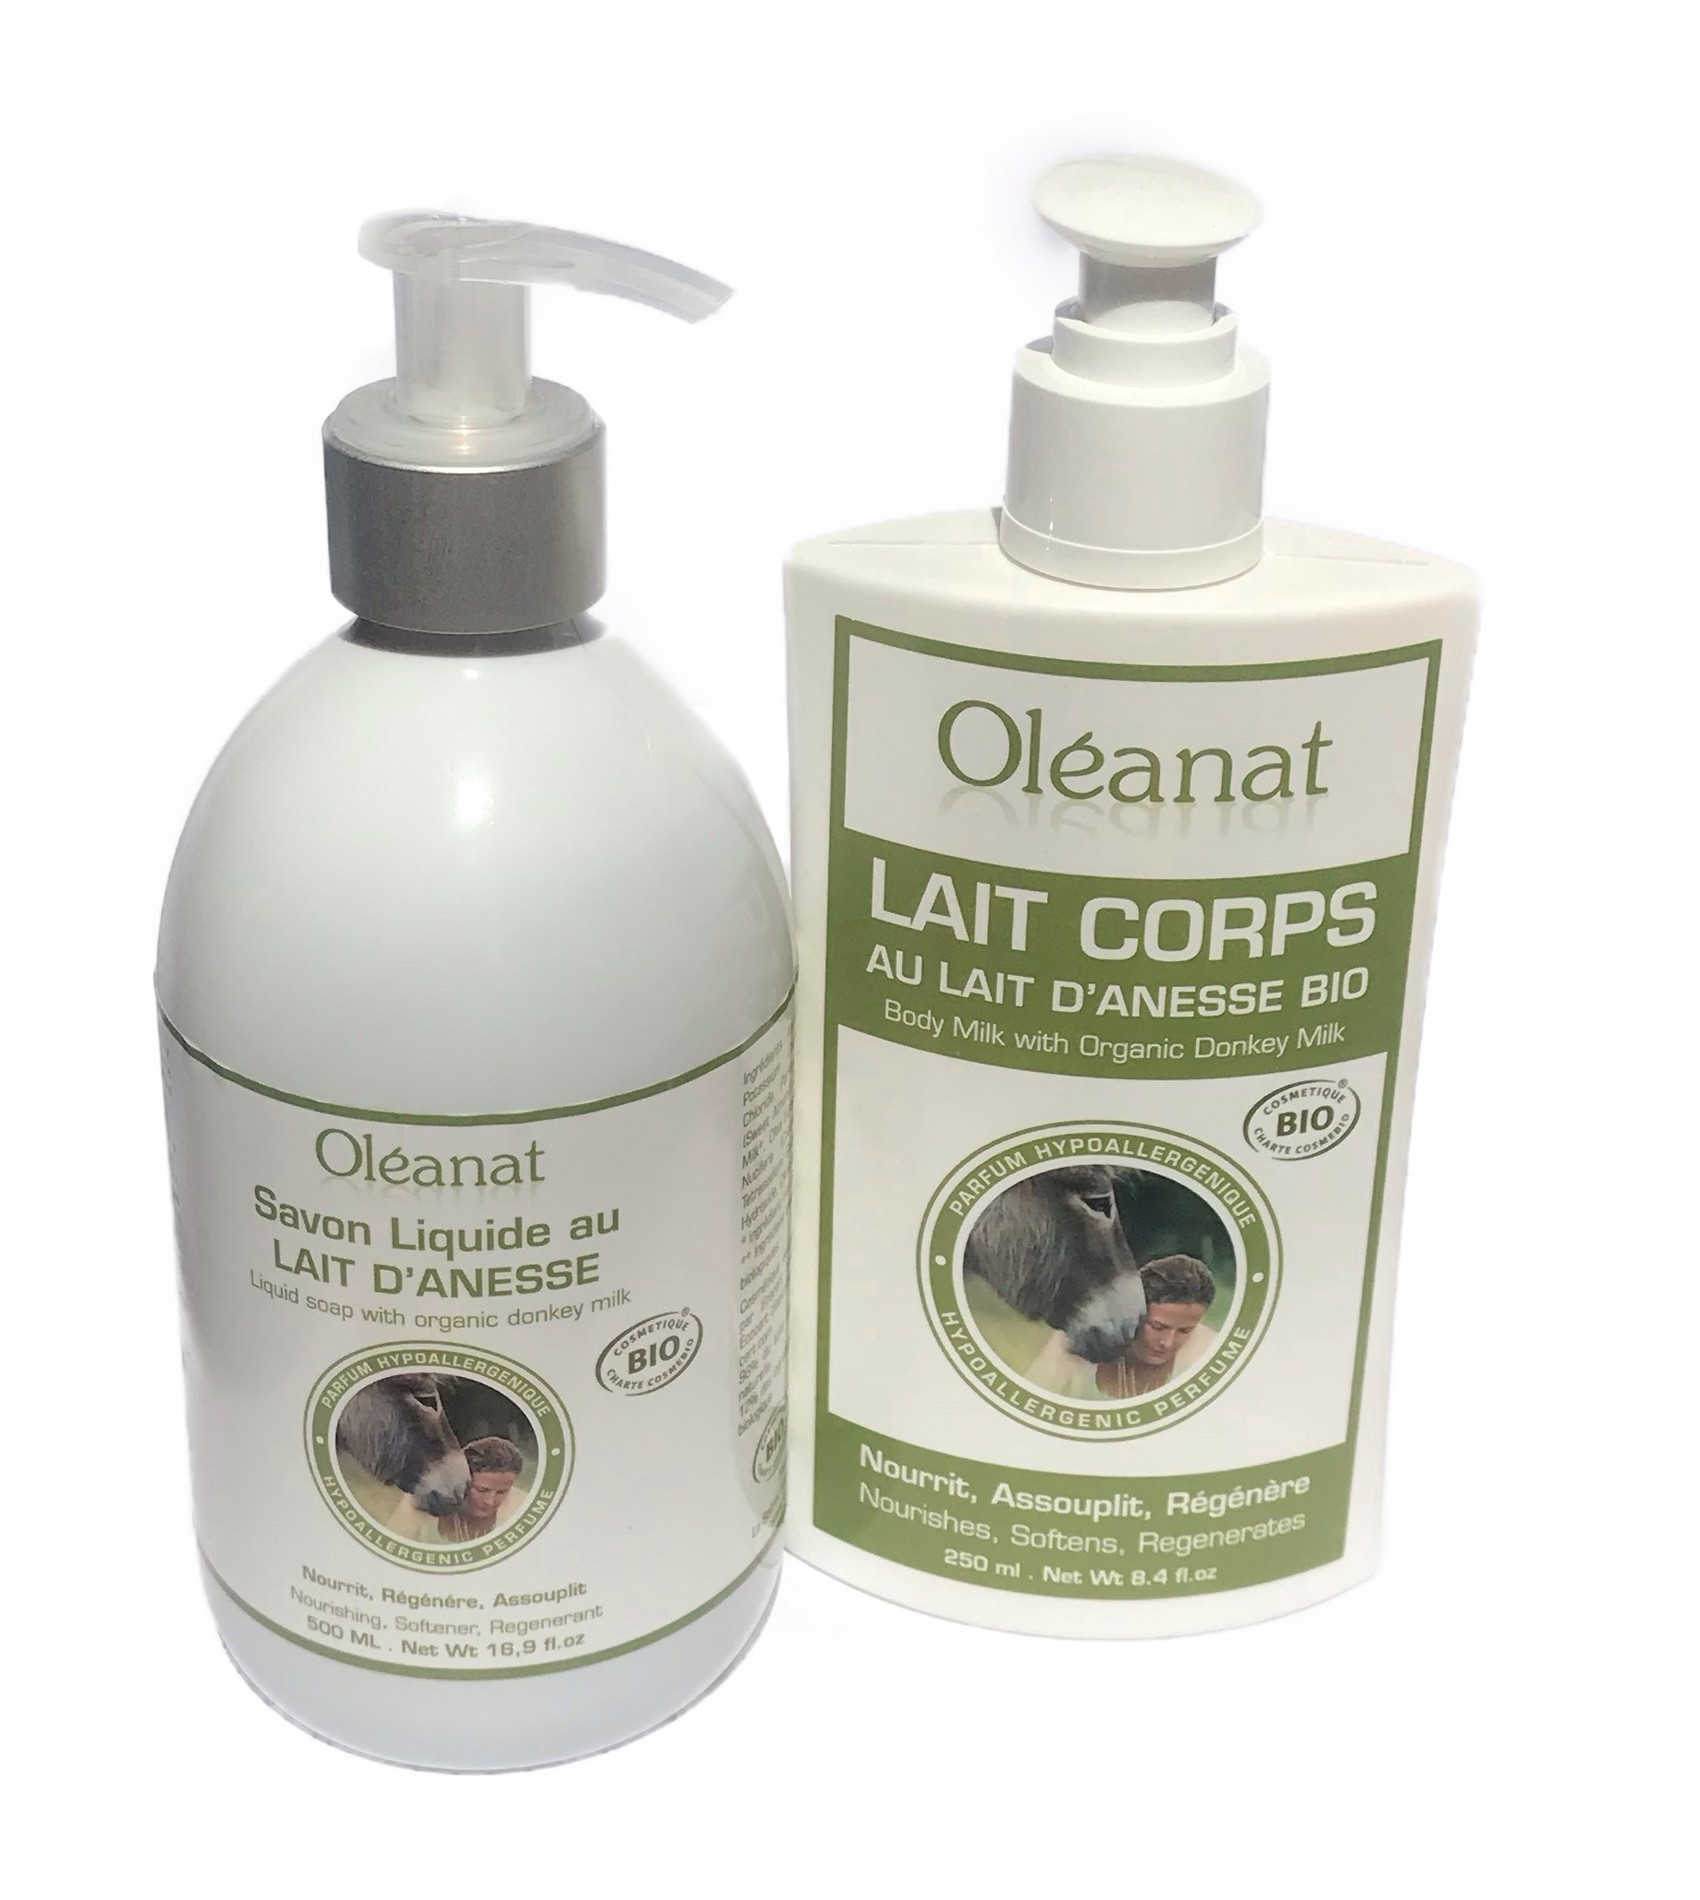 Oléanat Organic Donkey Milk Soap & Body Milk Duo